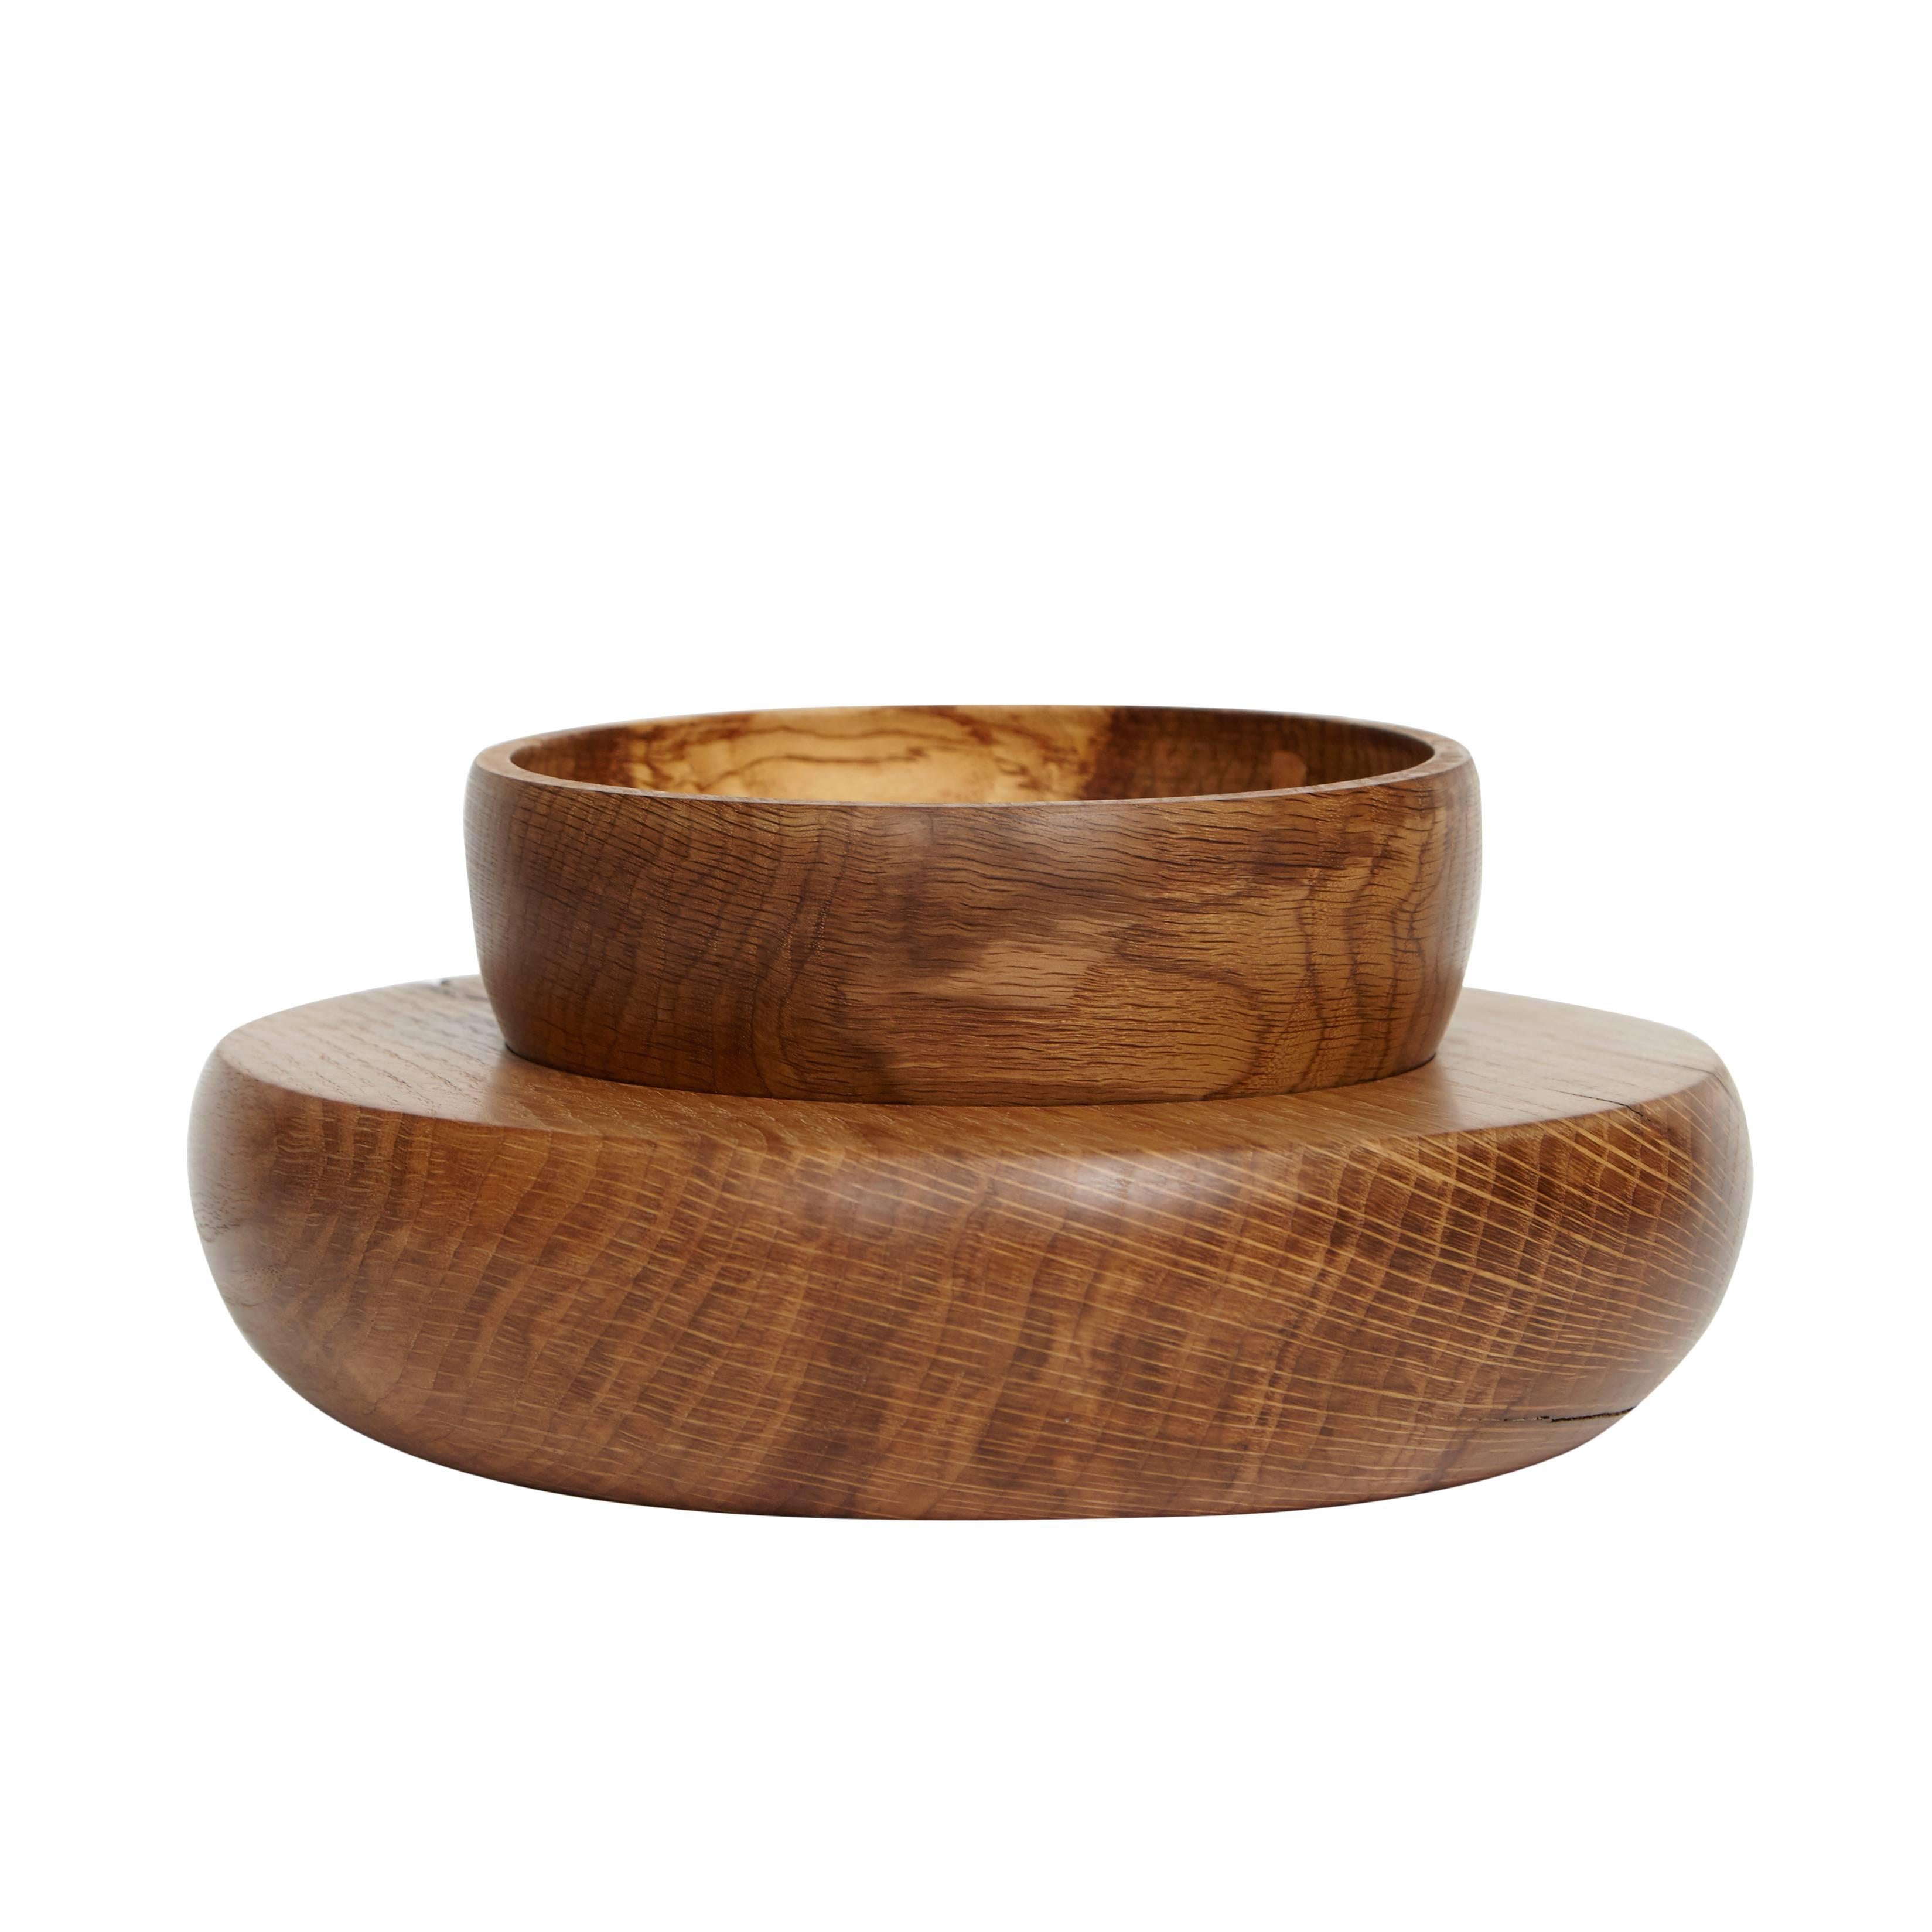 Klotzwrk solid oak lathe turned bowl set.

Big bowl D-9.5" H-2.5"
Small bowl D-6.25" H-2.5".